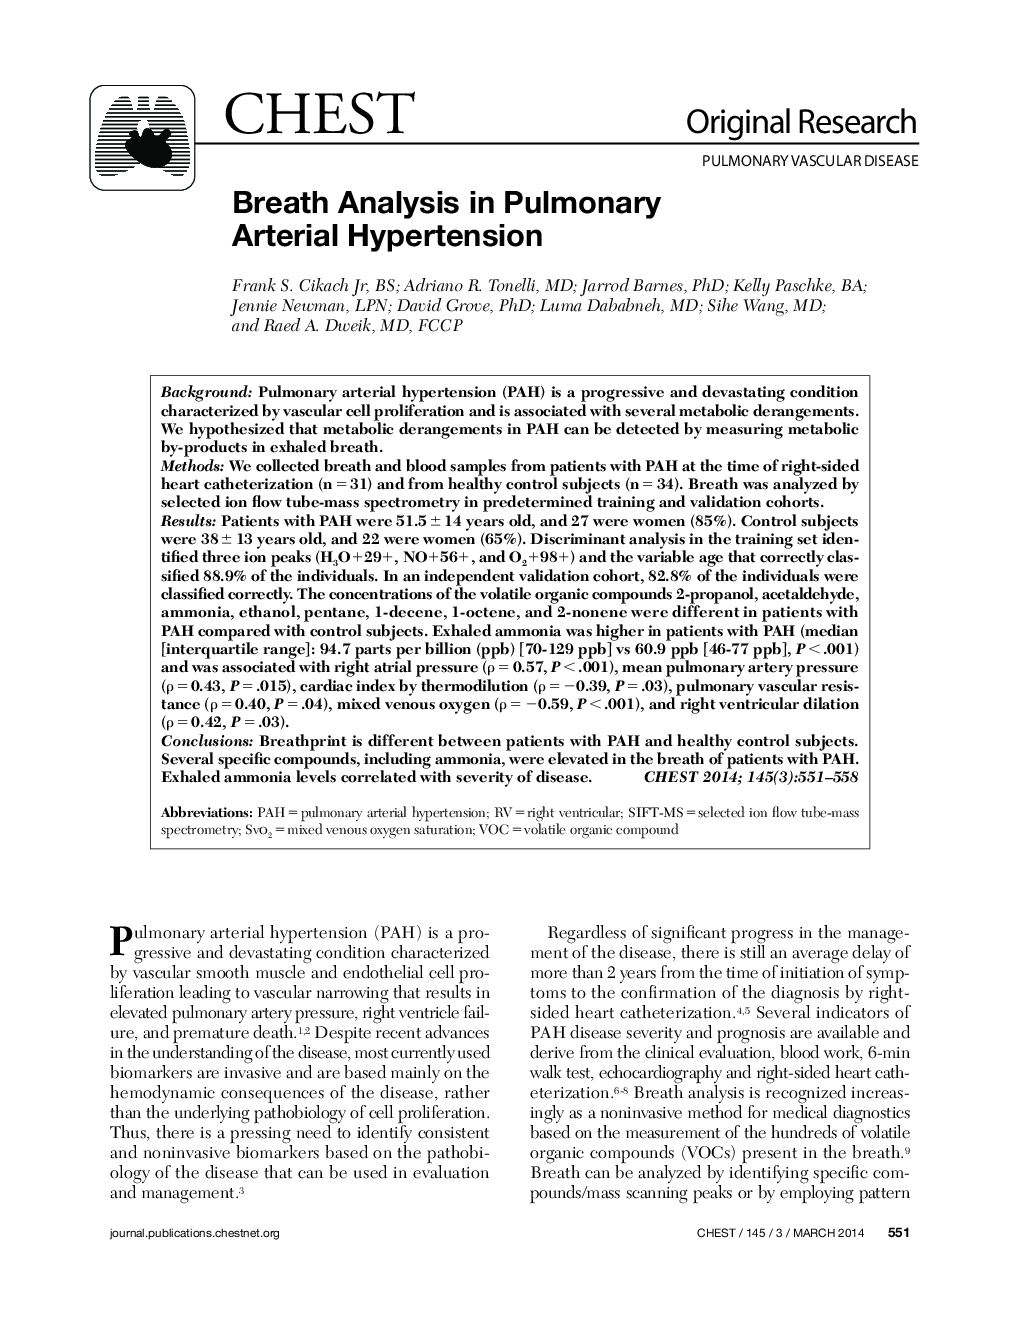 Breath Analysis in Pulmonary Arterial Hypertension 